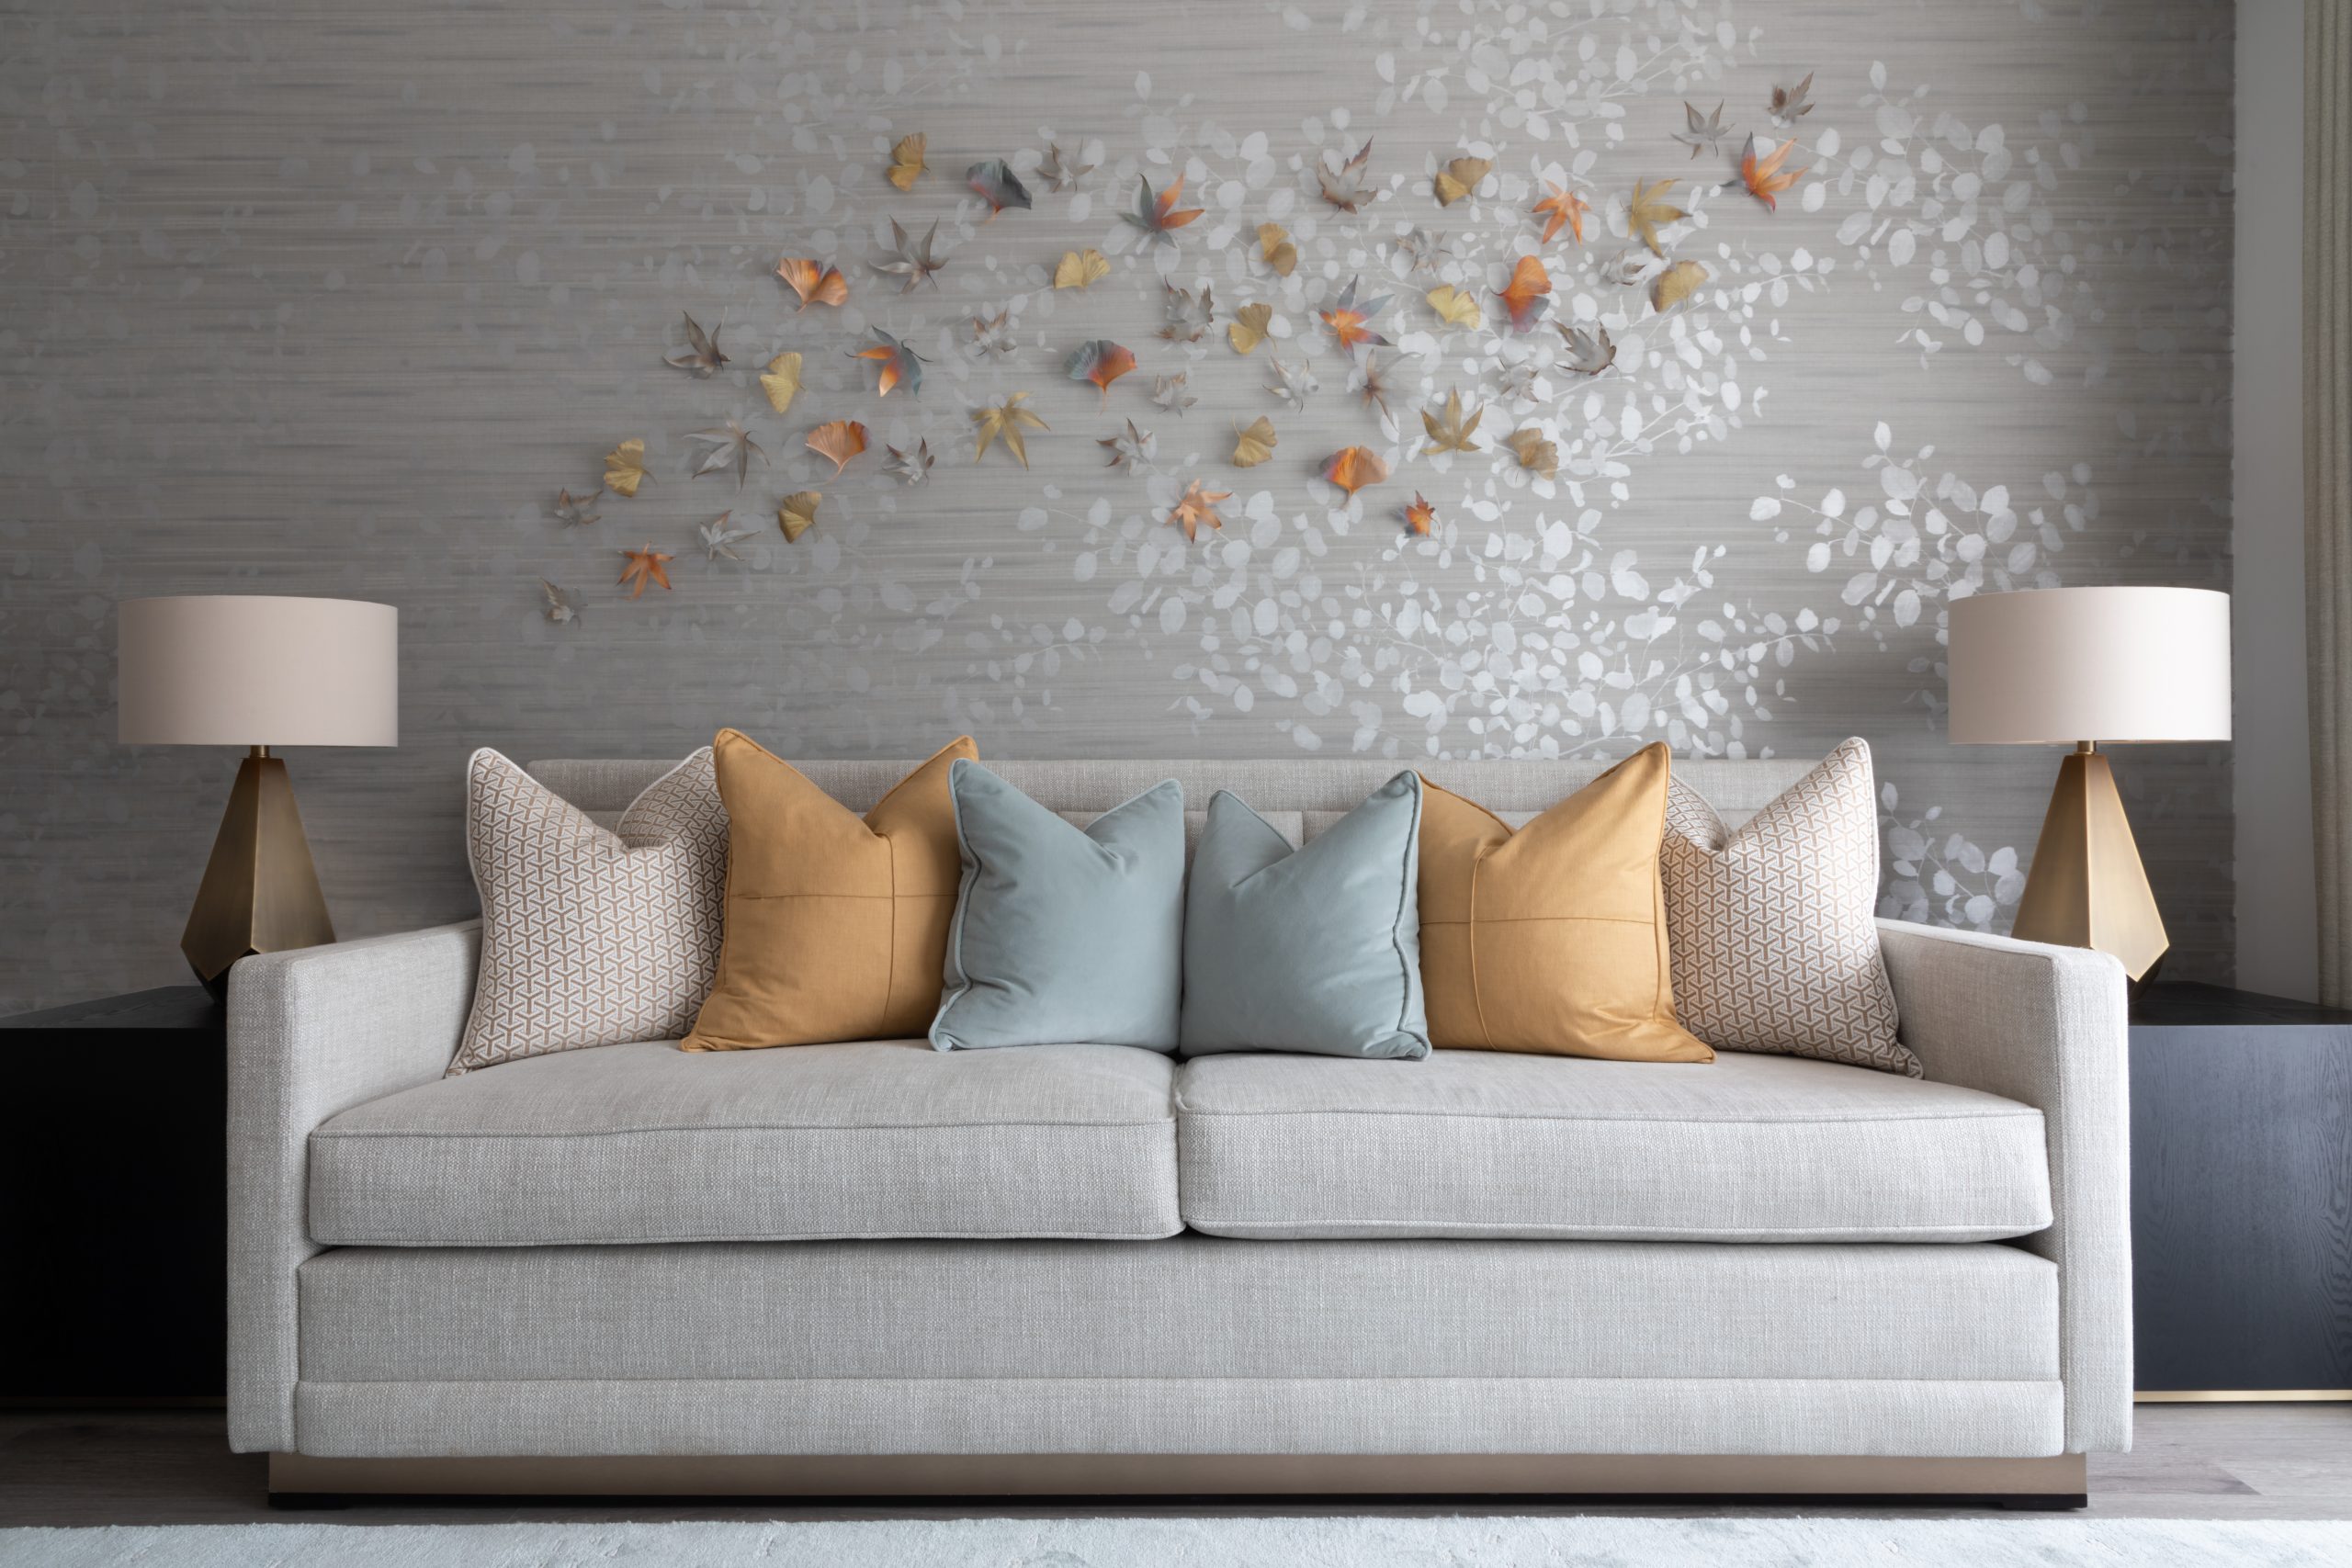 Sofa and Wall Design